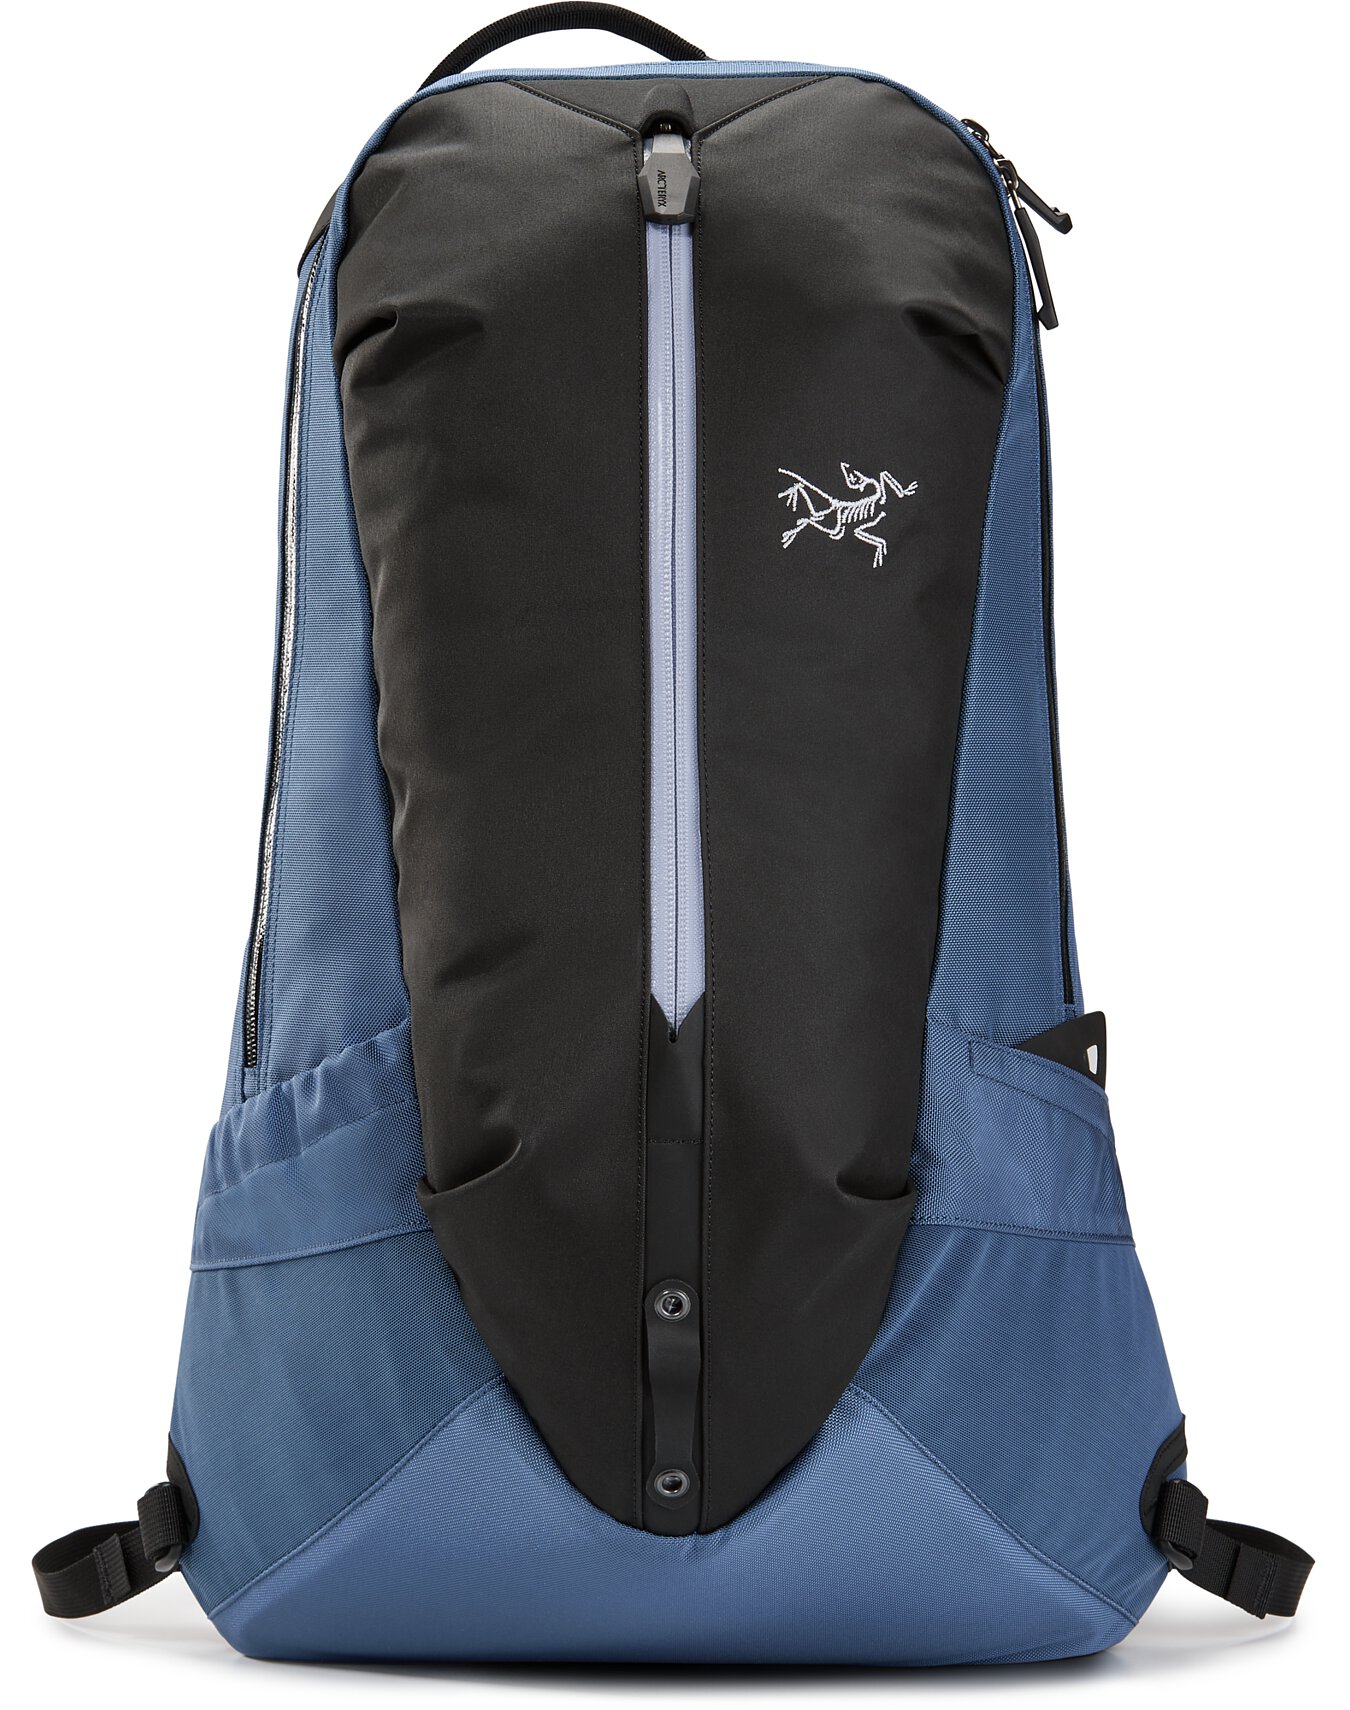 Arro 22 Backpack | Arc'teryx Outlet